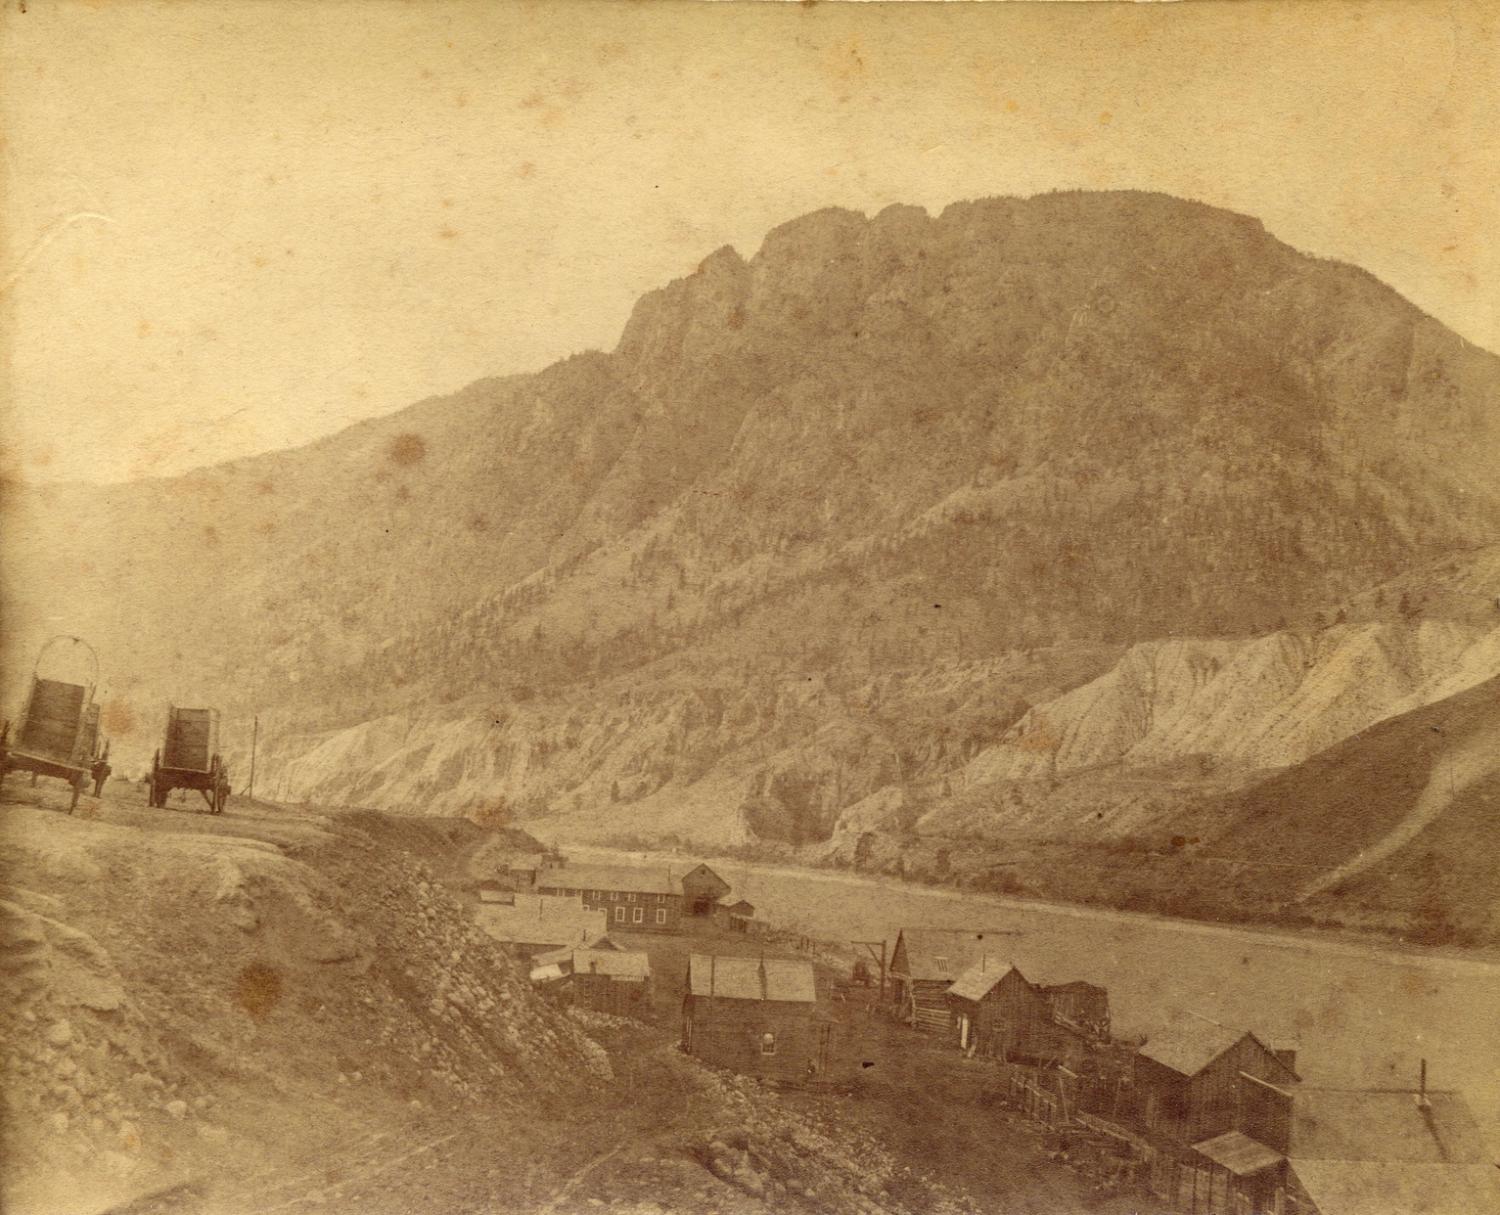 Spences Bridge in the early 1880s.